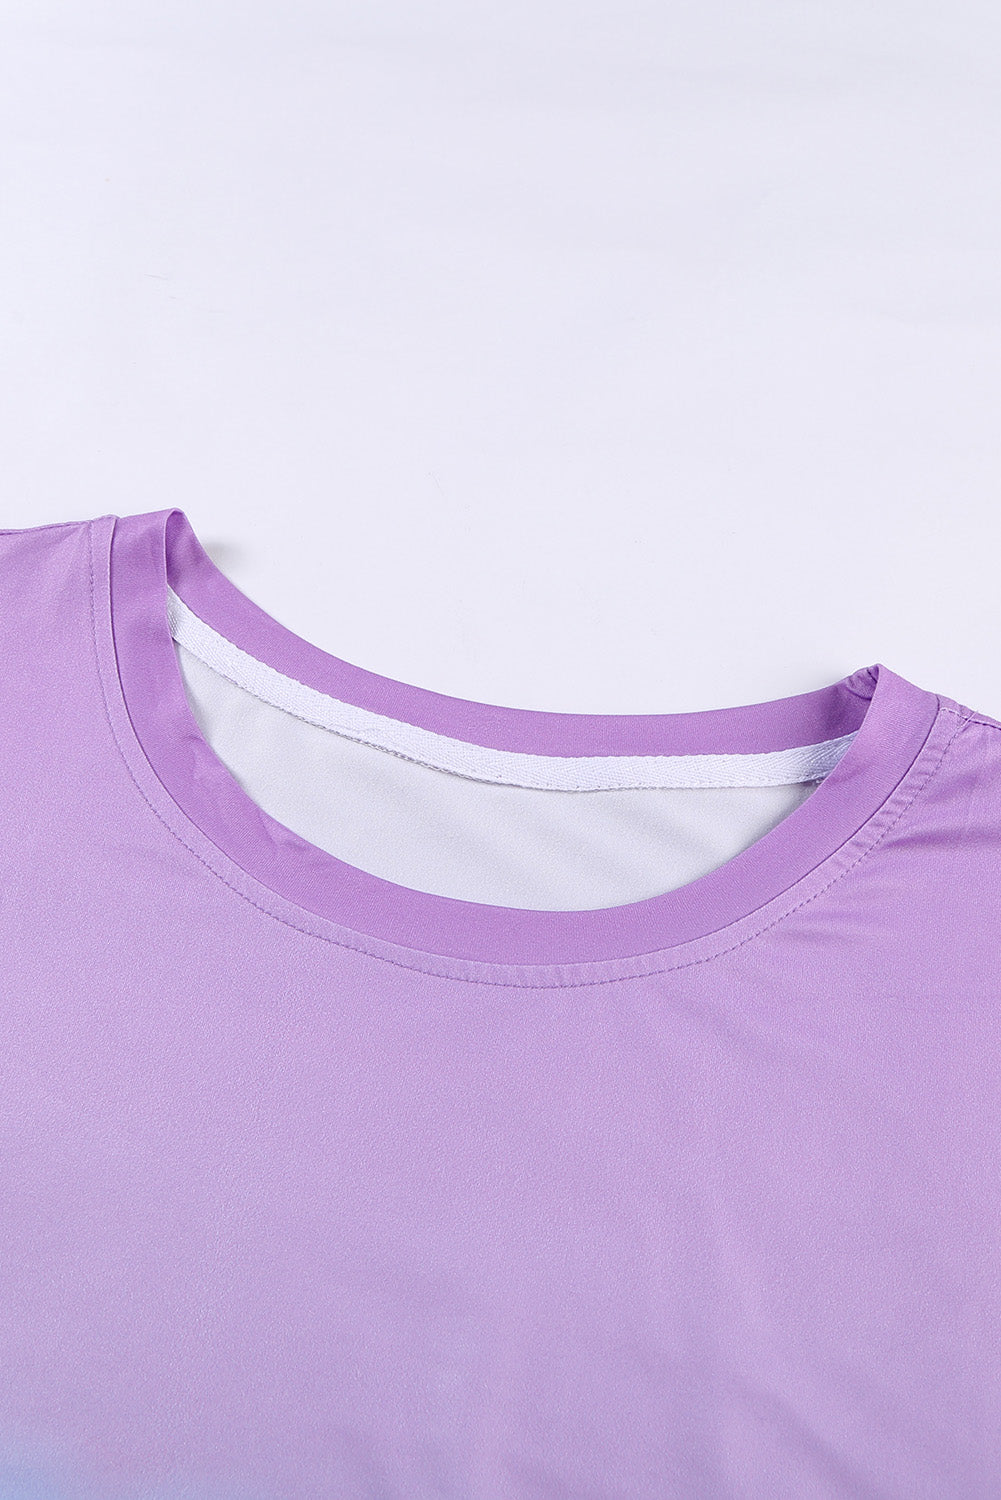 Purple Crew Neck Tie-dye Colorblock Plus Size Tee OniTakai